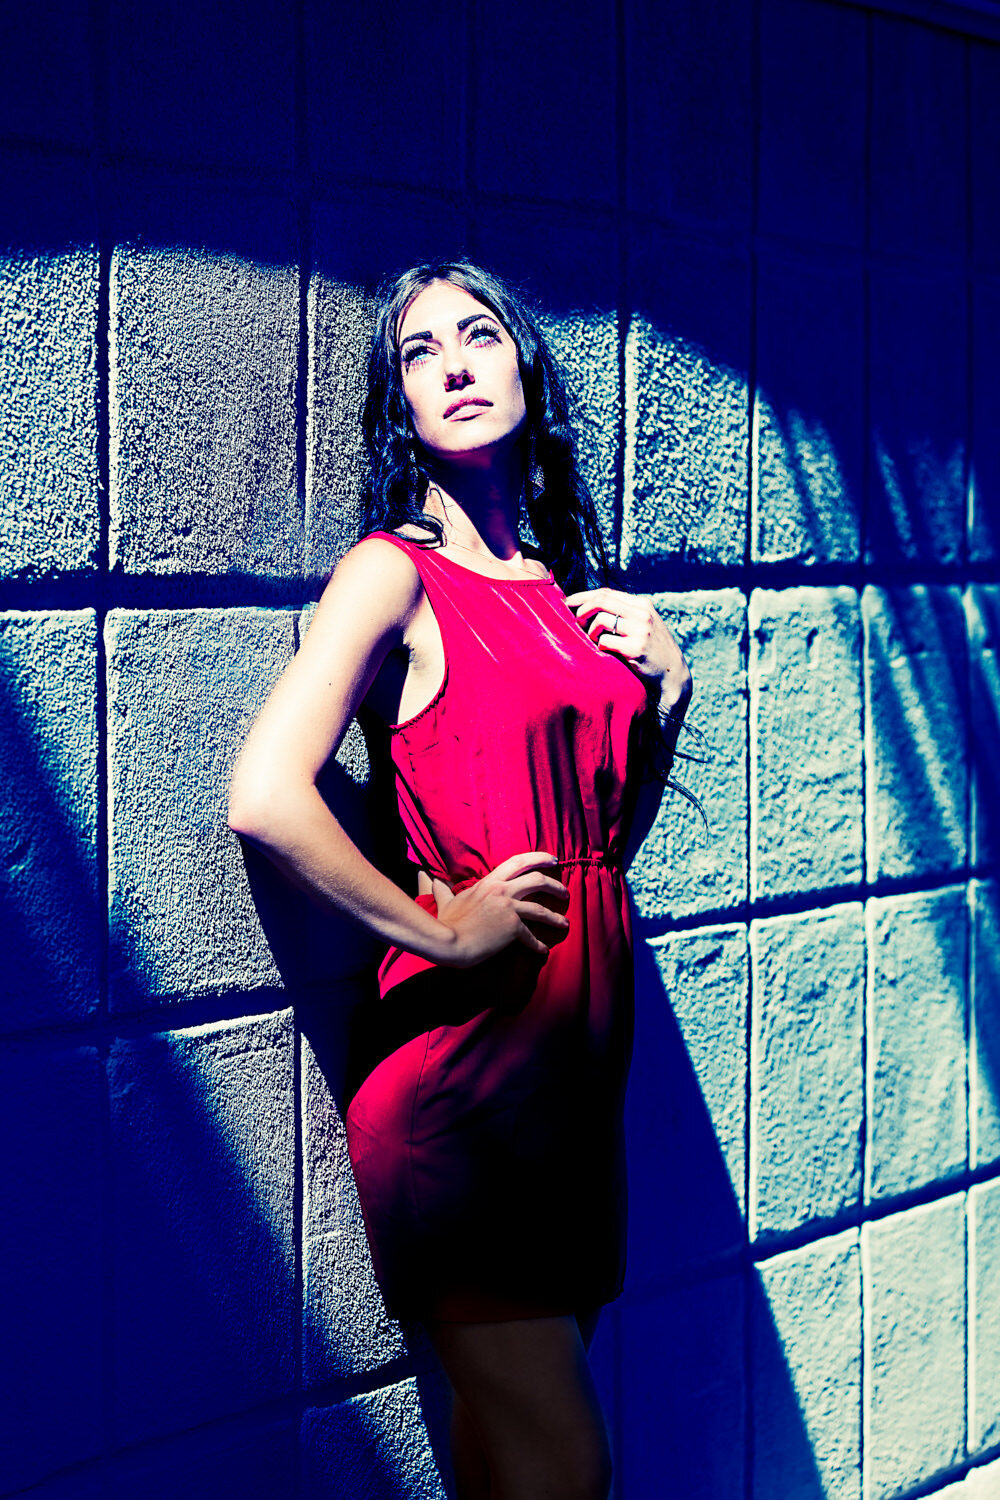 Beverly-Hills-fashion-portrait-red-dress.jpg